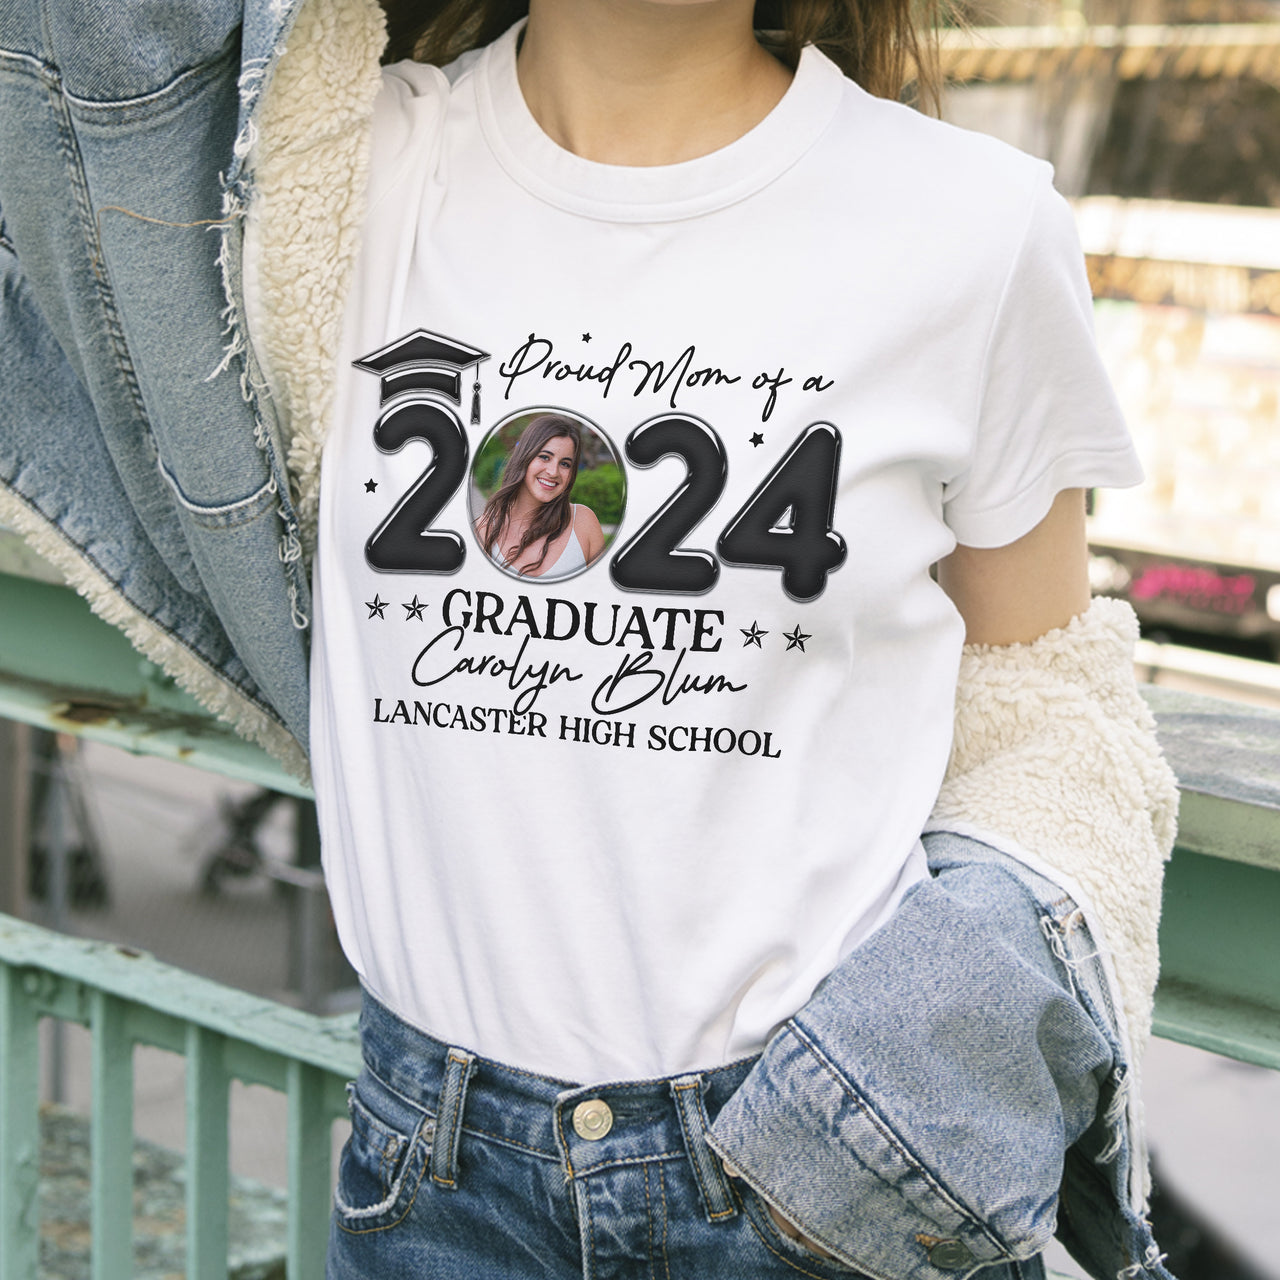 Personalized T-shirt - Graduation Keepsake Gift - Balloon Style Proud Mom Dad Of A 2024 Graduate Photo Merchize